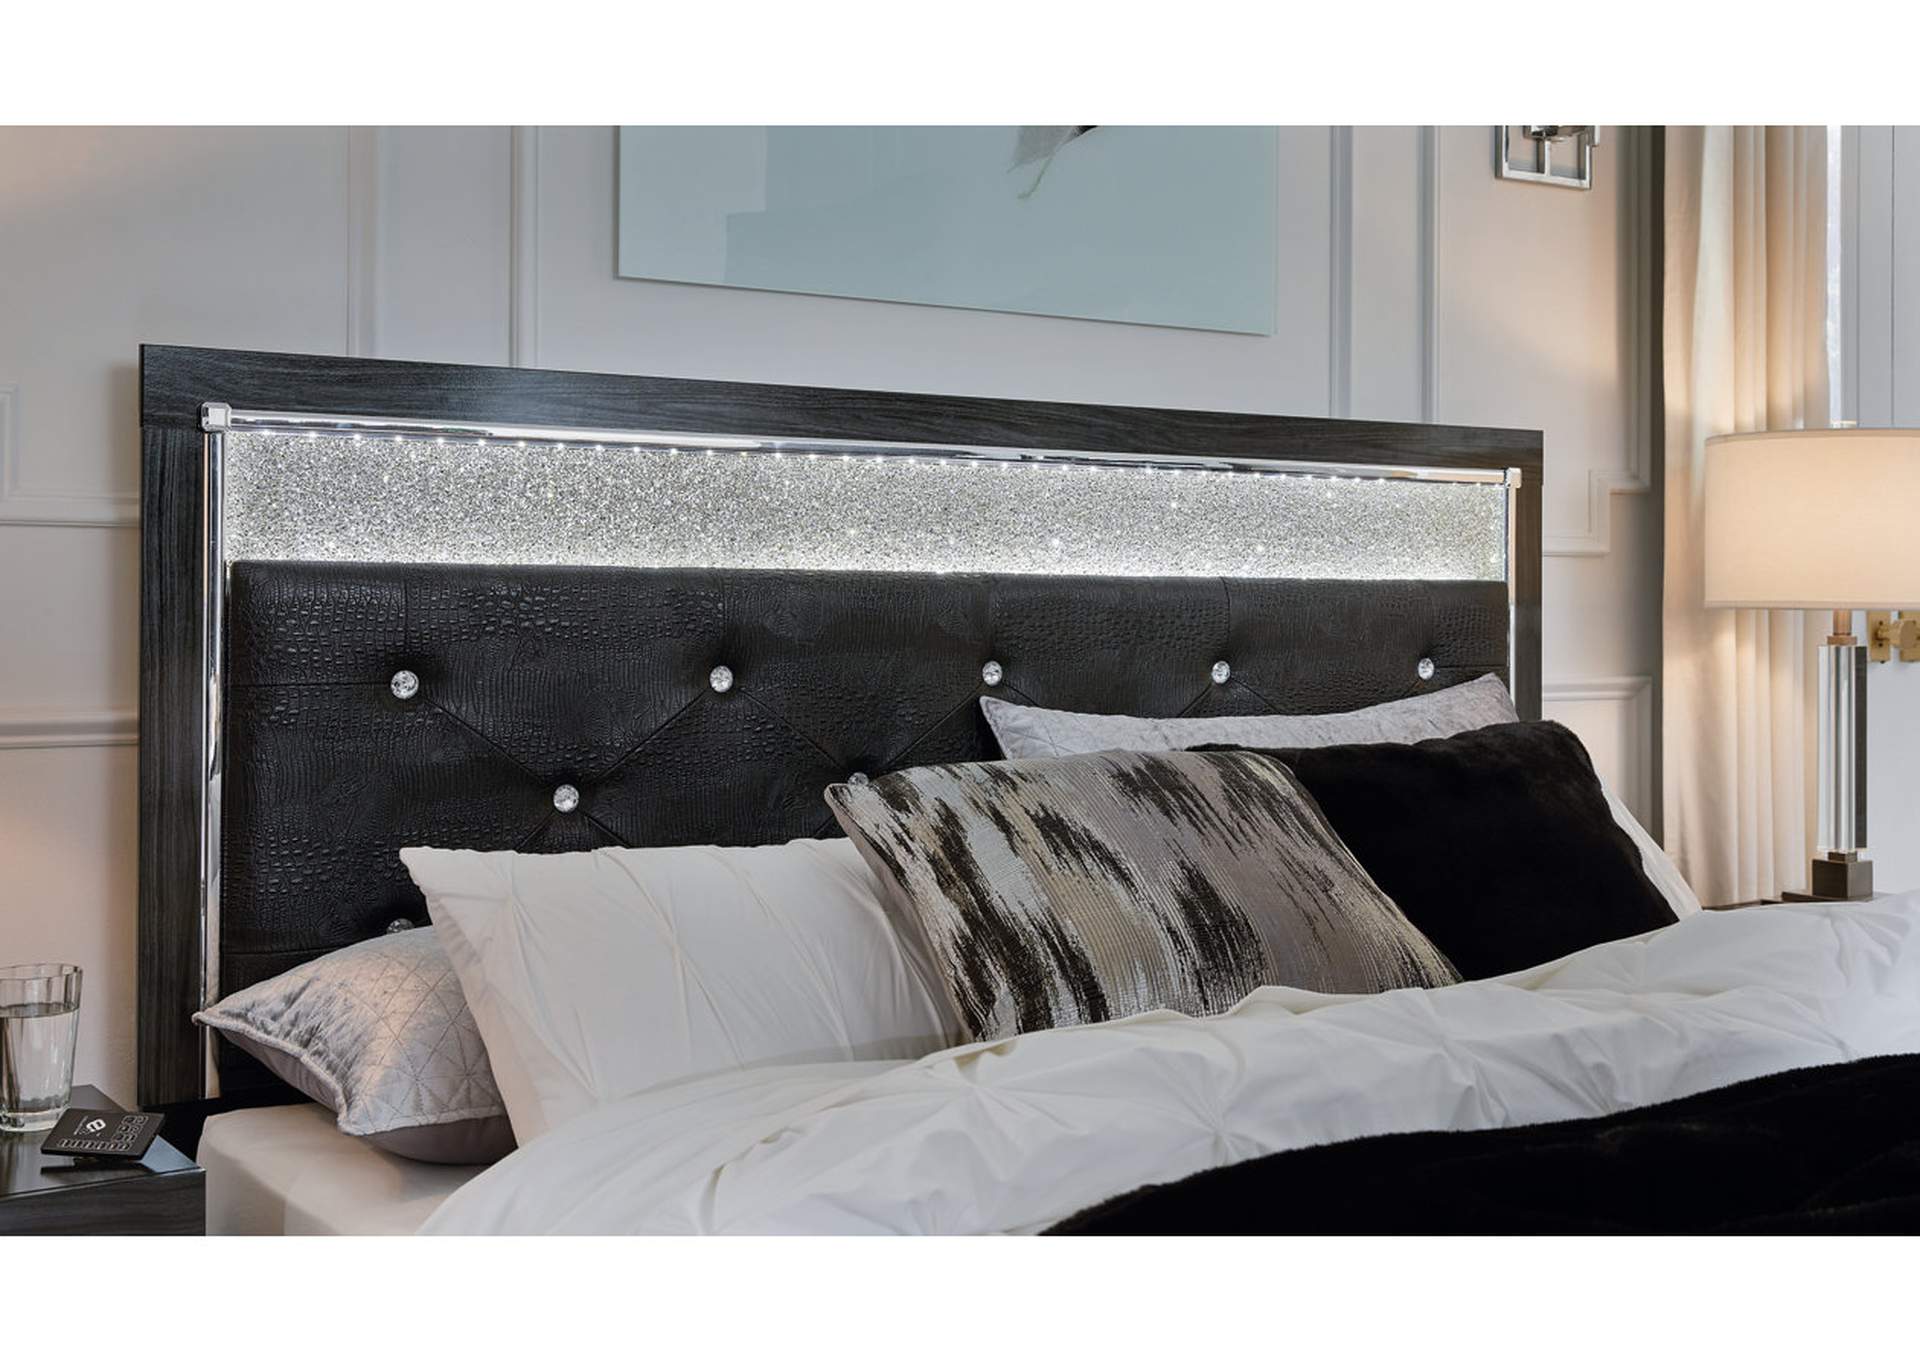 Kaydell Queen Upholstered Panel Platform Bed,Signature Design By Ashley